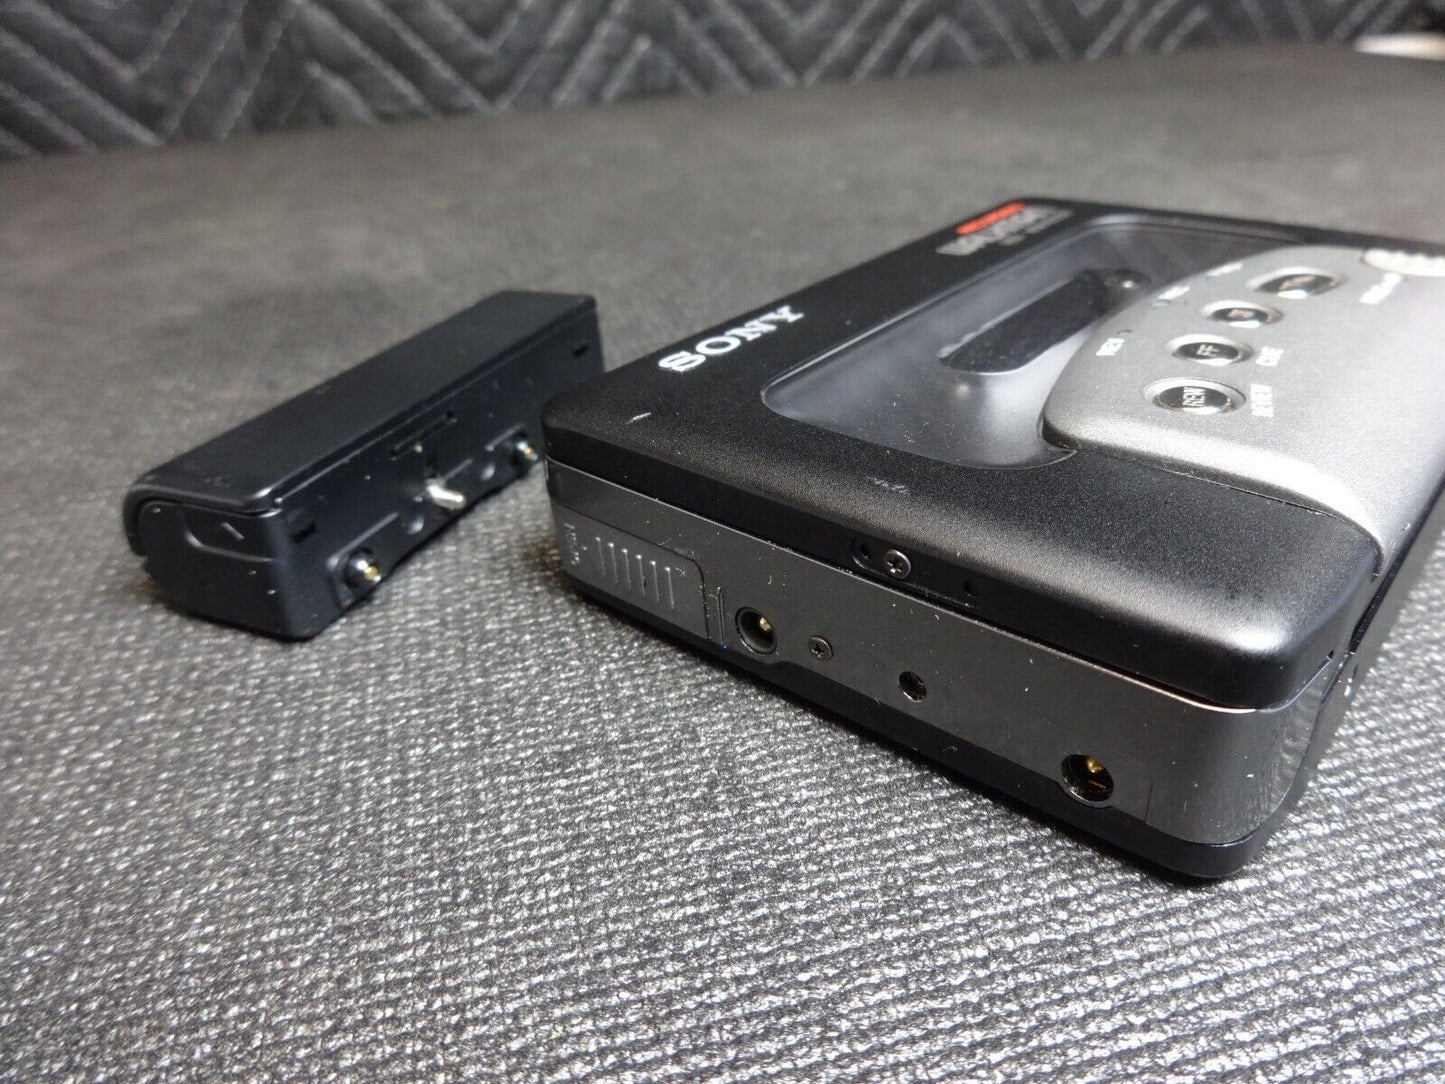 SONY recording Walkman cassette player WM-RX707 w/ AA Battery Adapter *SERVICED*